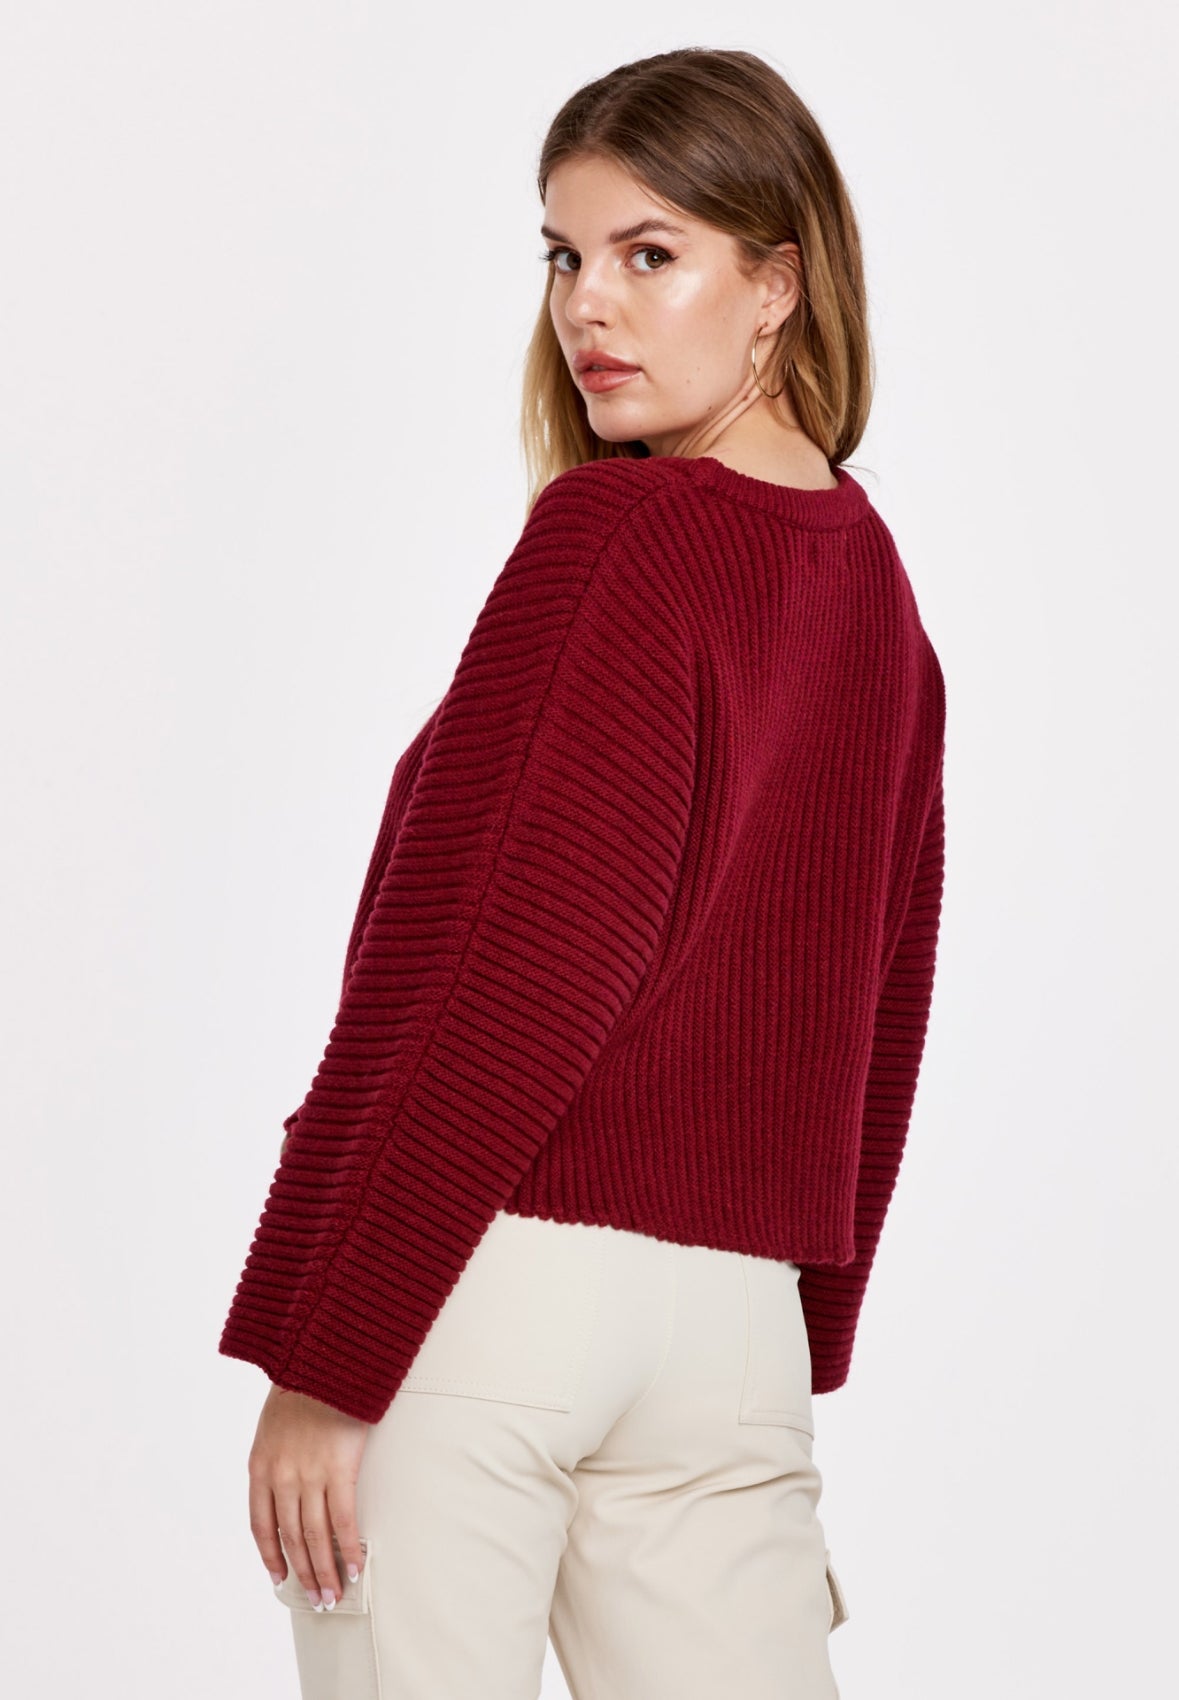 Parker Morado Sweater Top